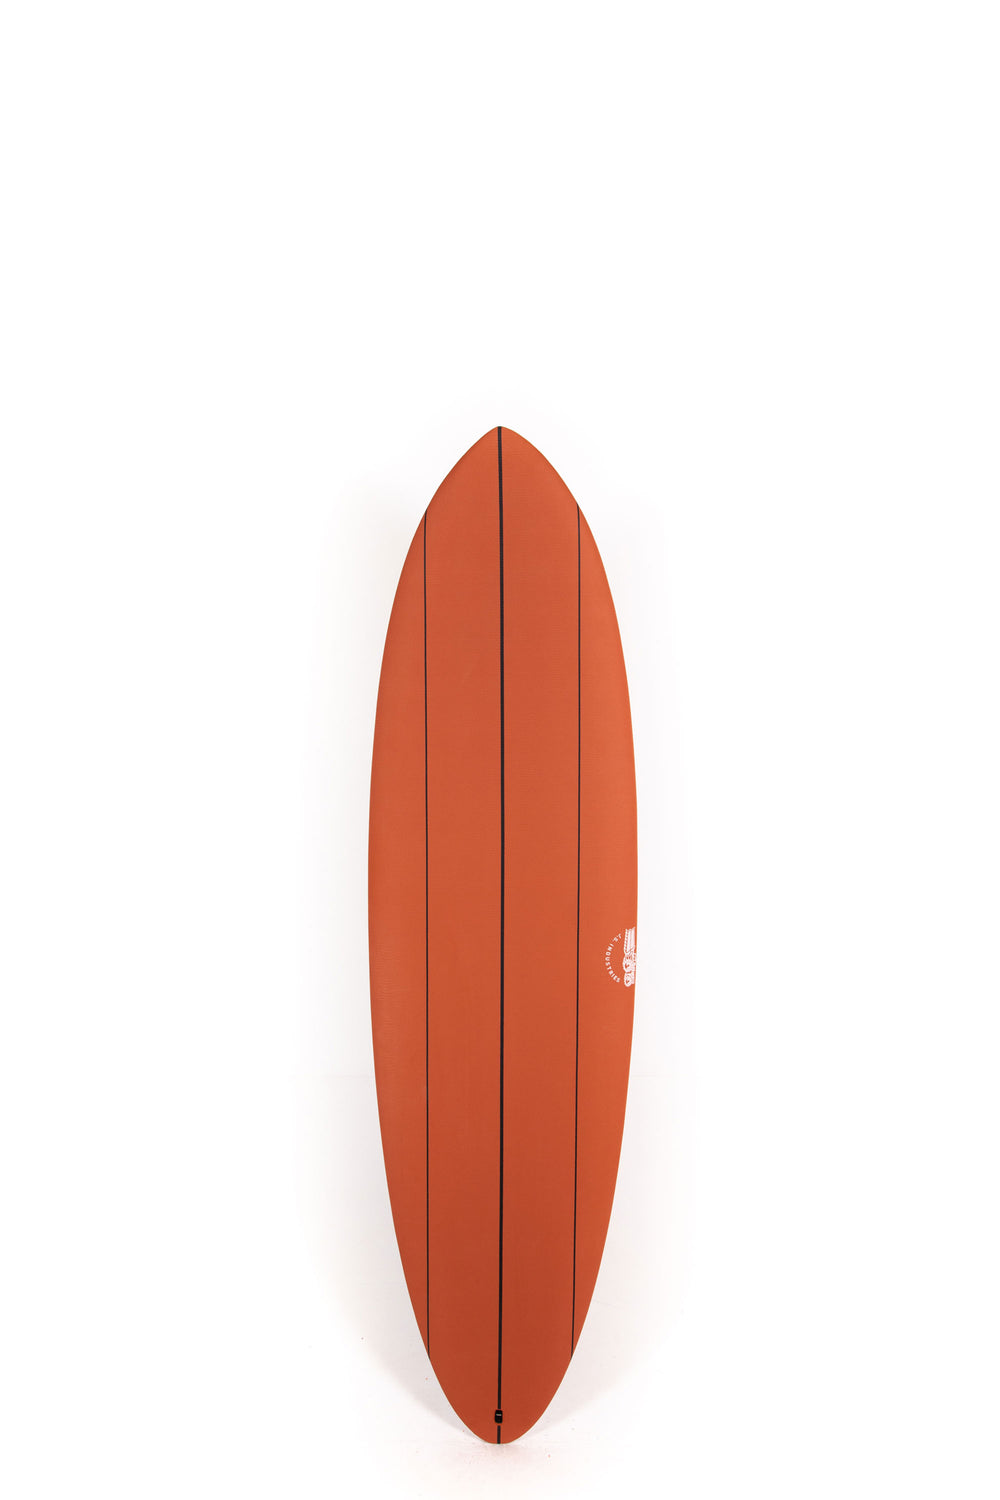 Pukas Surf Shop - JS Surfboards - BIG BARON SOFT - 6'4